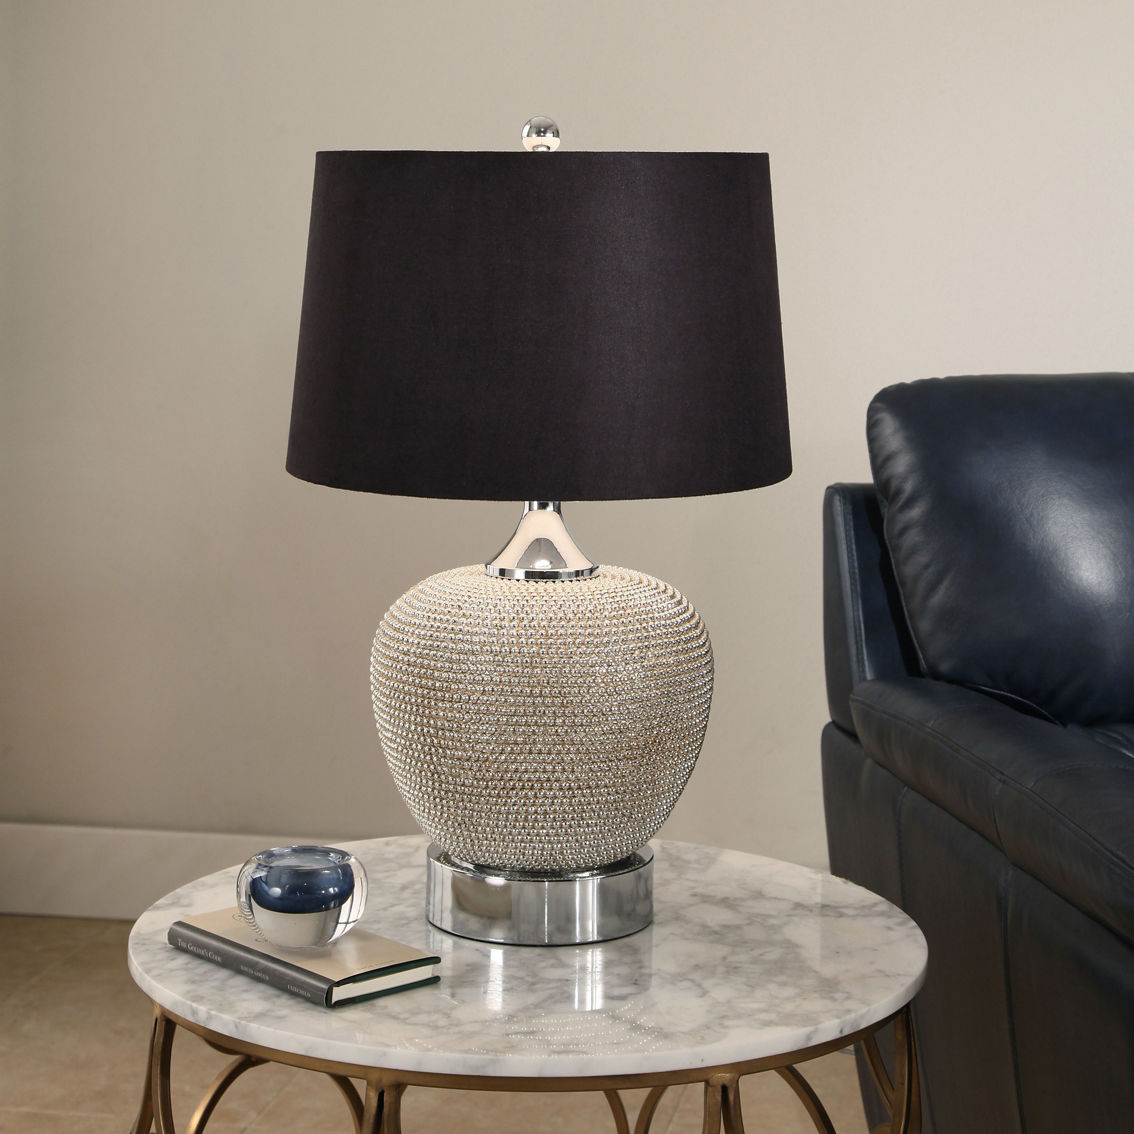 Abbyson Celine Beaded Table Lamp - Image 2 of 4